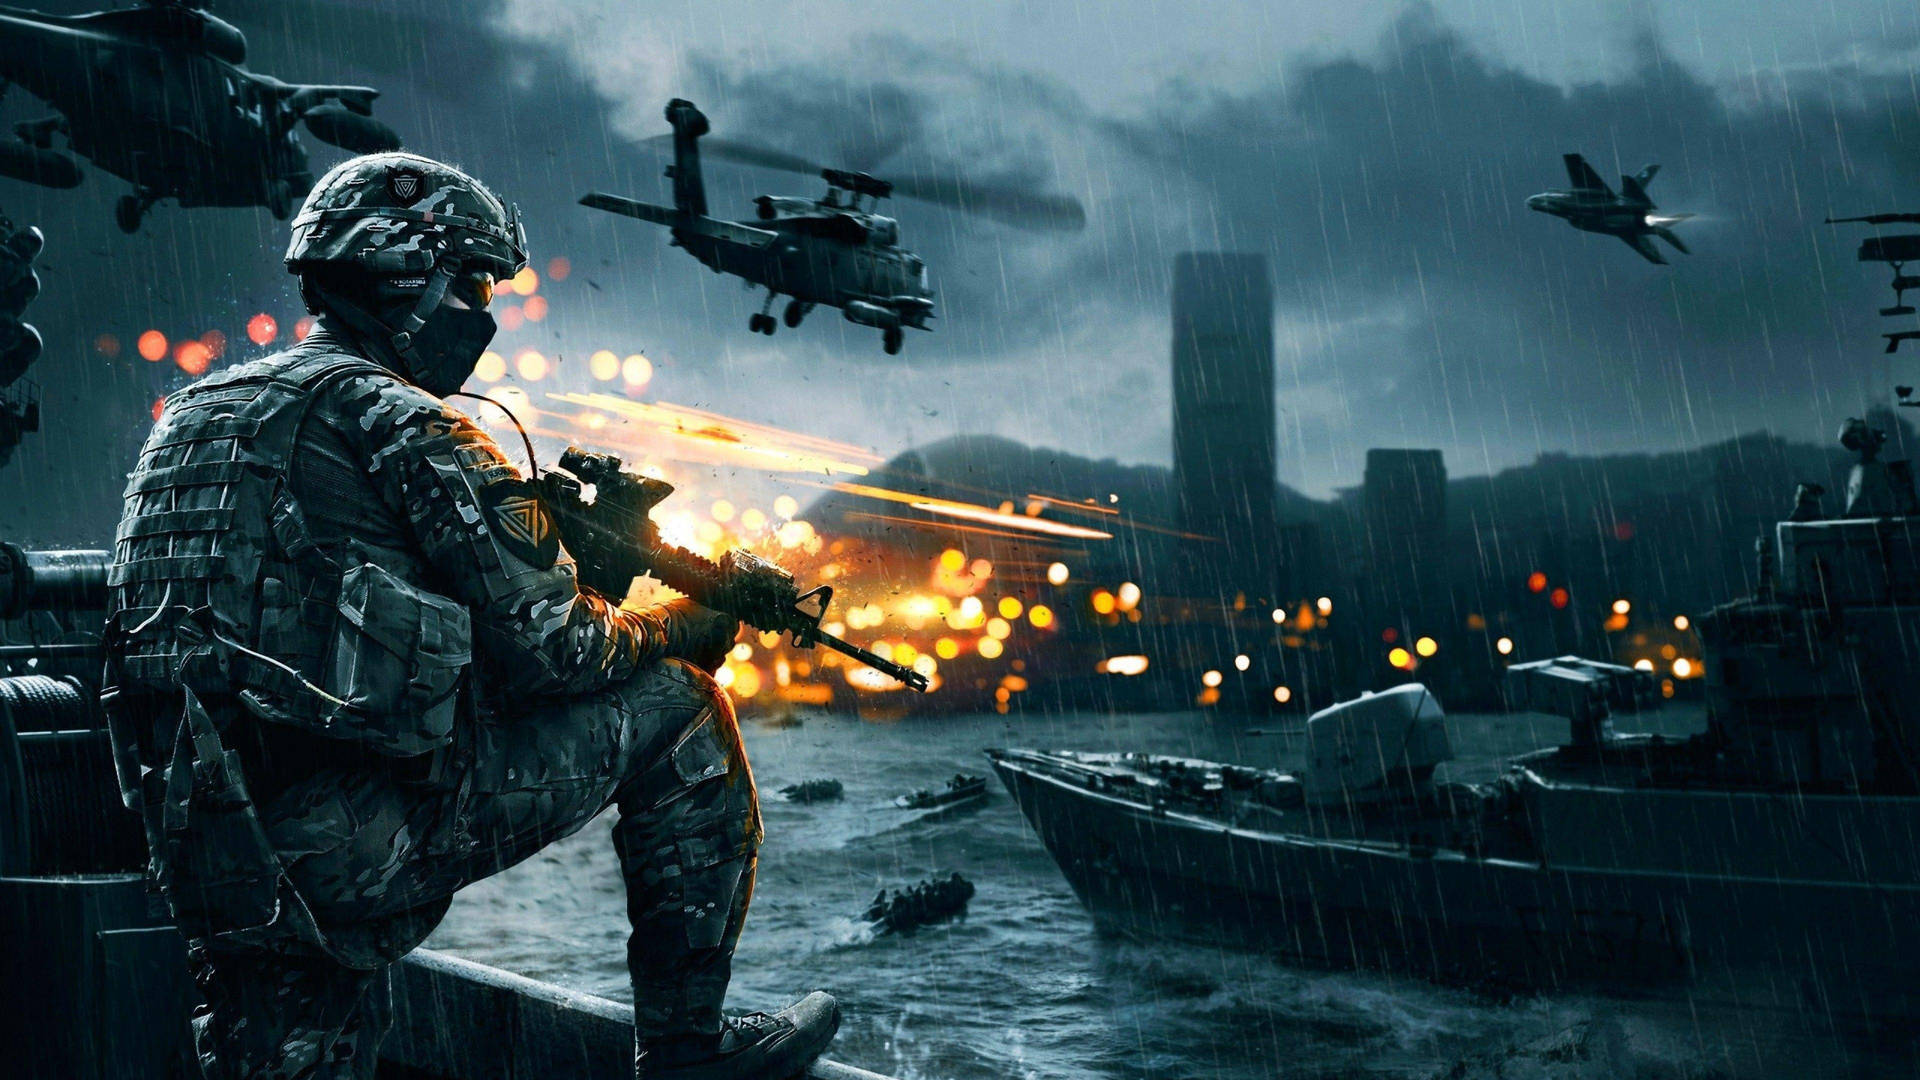 Epic Battlefield 4 City View Wallpaper